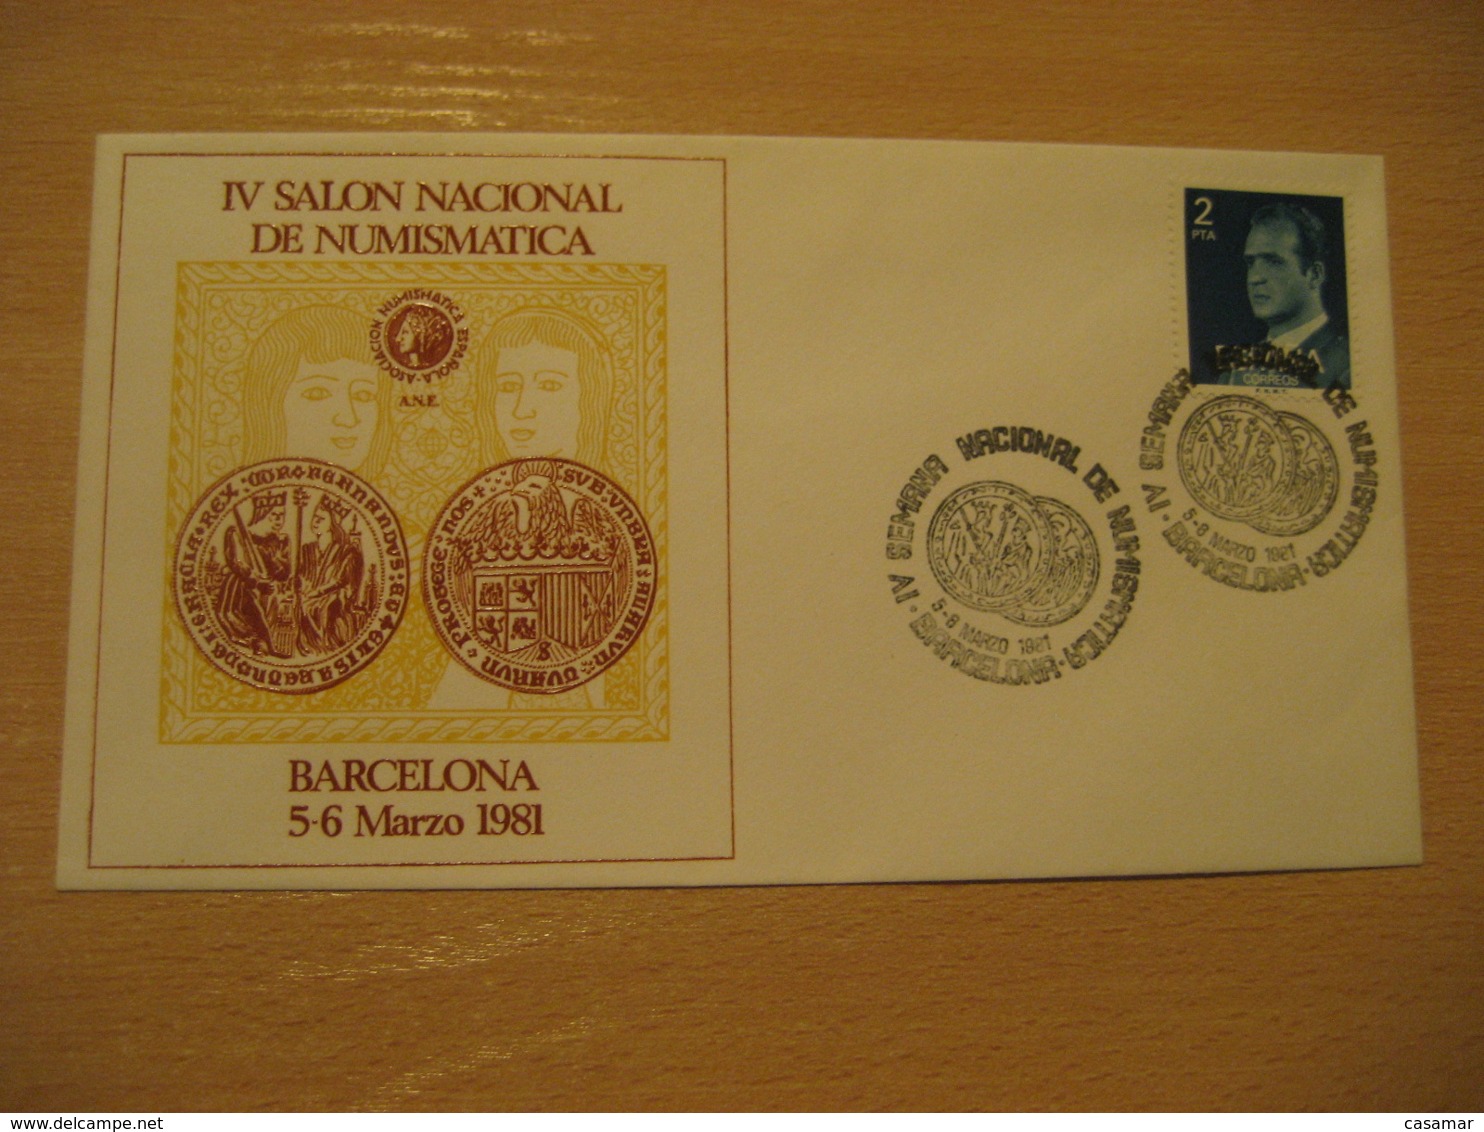 BARCELONA 1981 Salon Semana Numismatica Monedas Moneda Cancel Cover SPAIN Coin Coins Numismatics Numismatique - Münzen